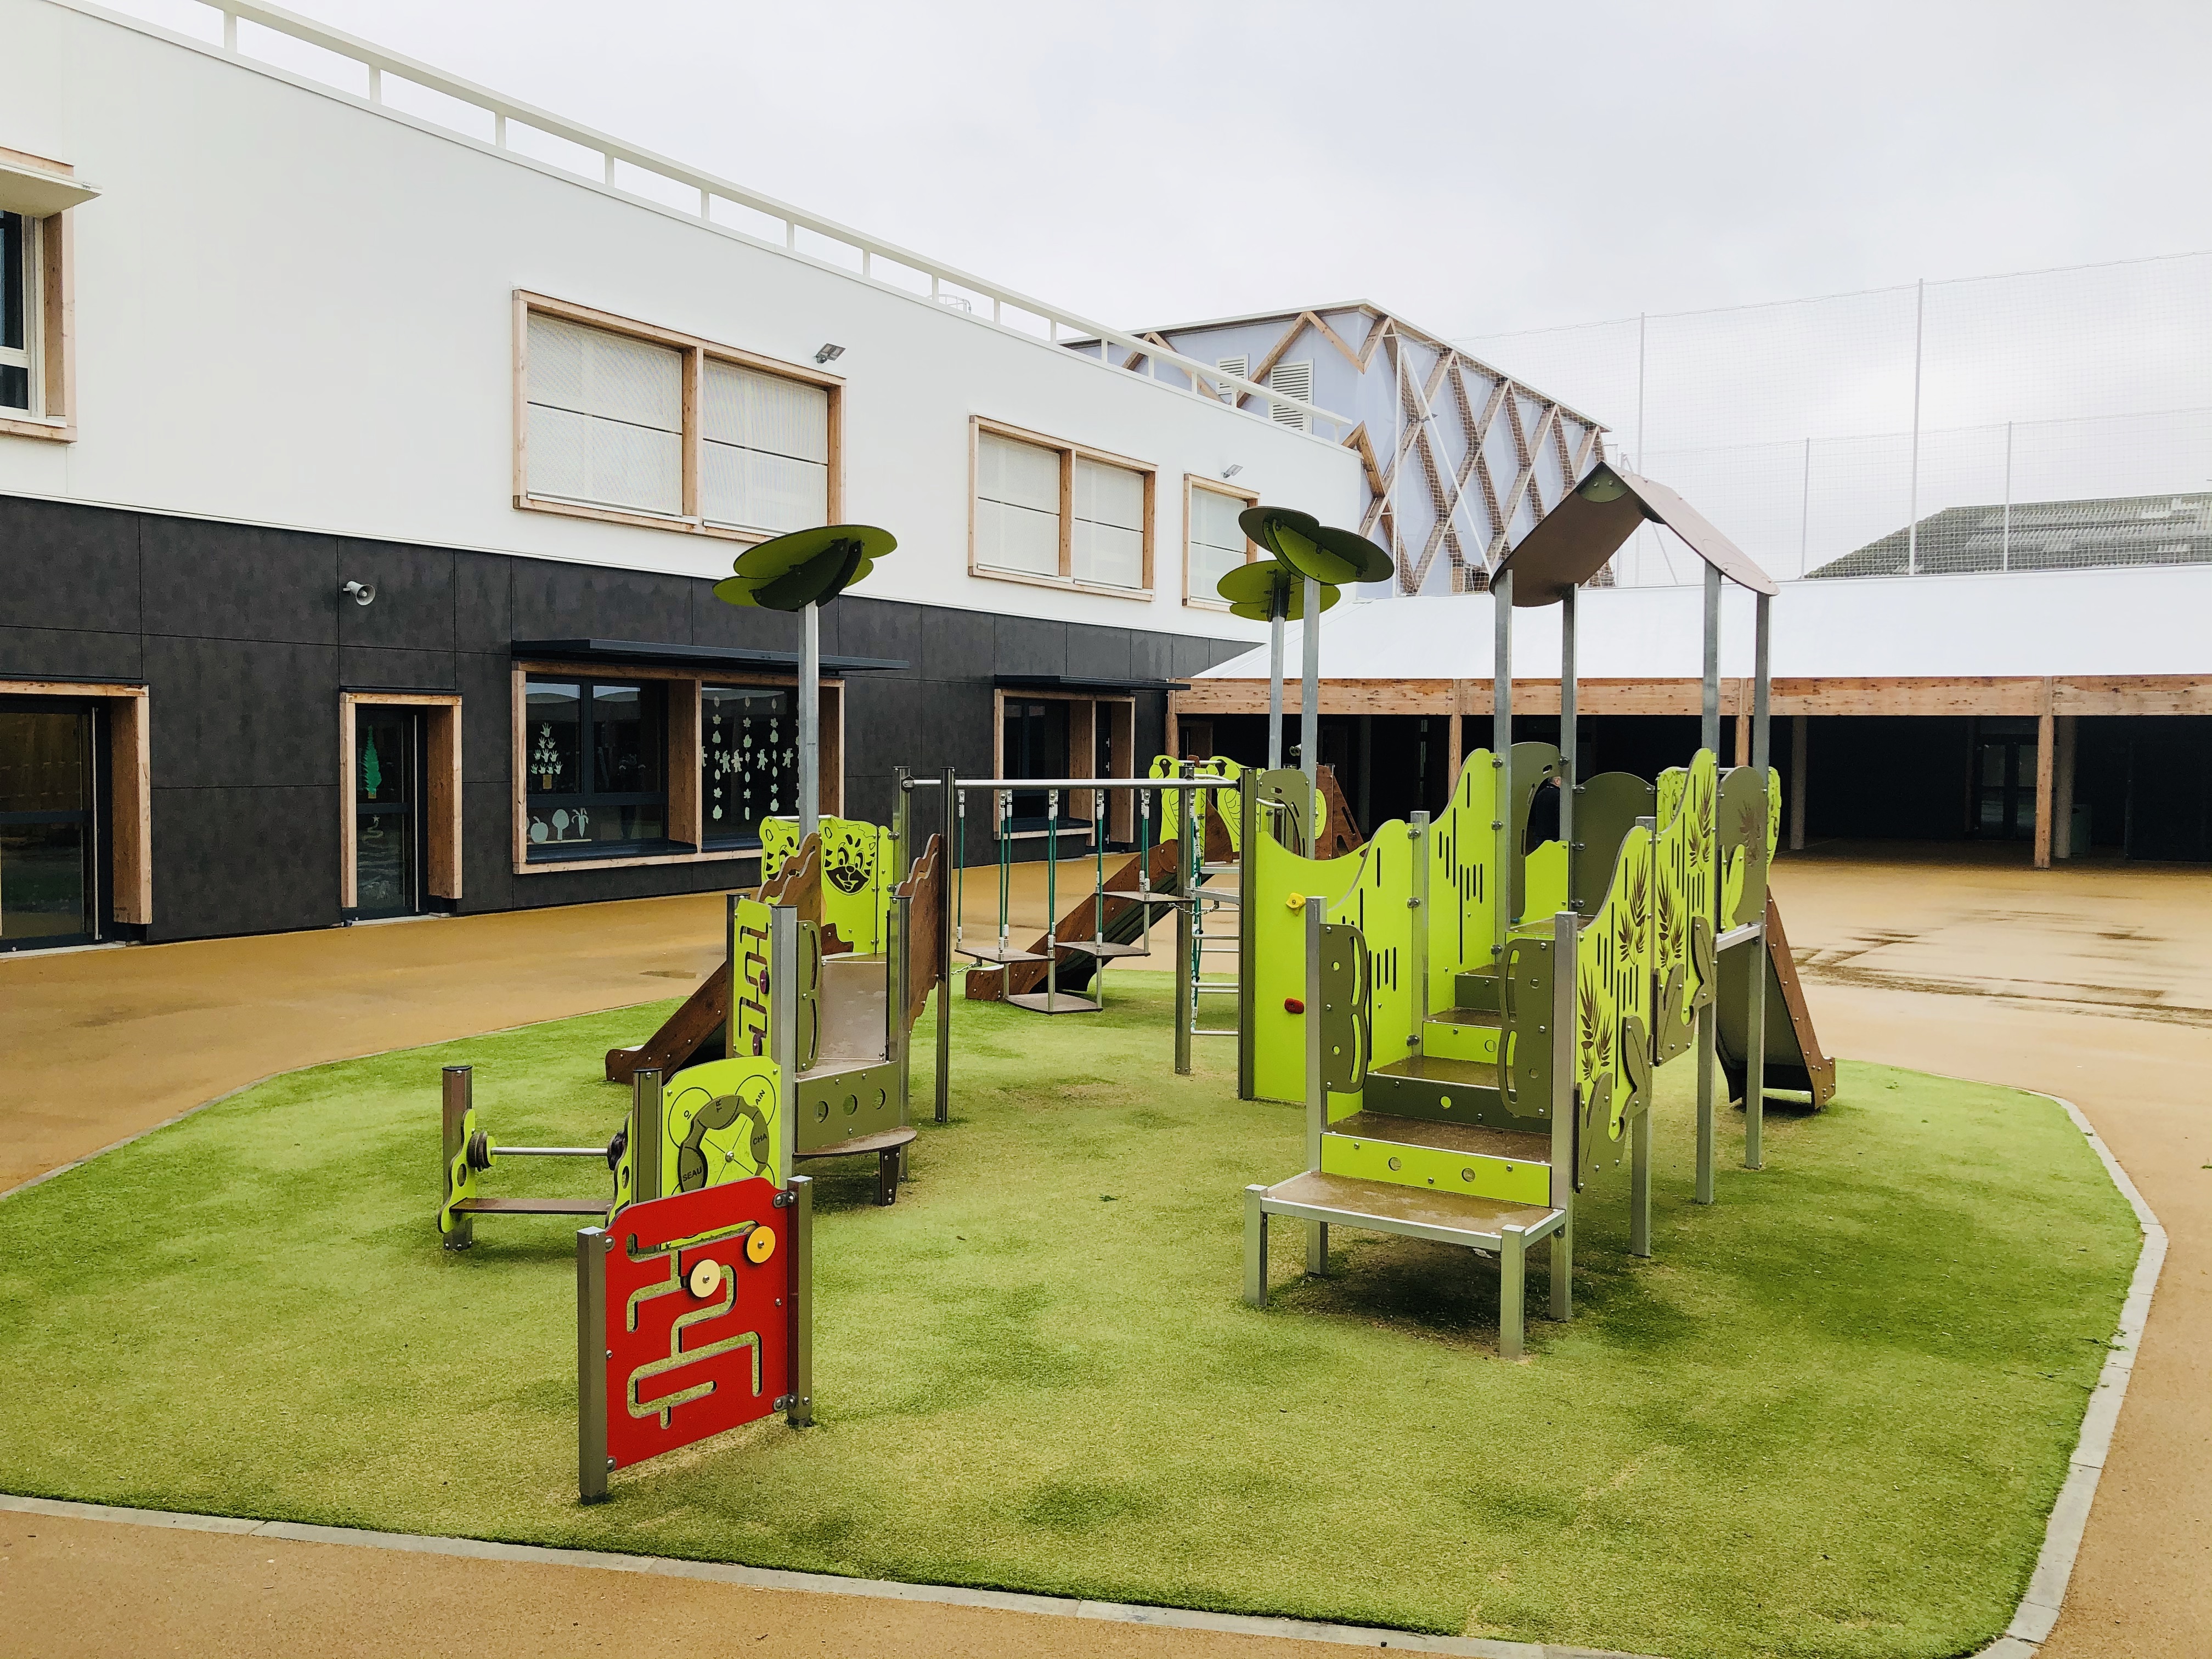 outdoor play areas for primary schools, educational establishments